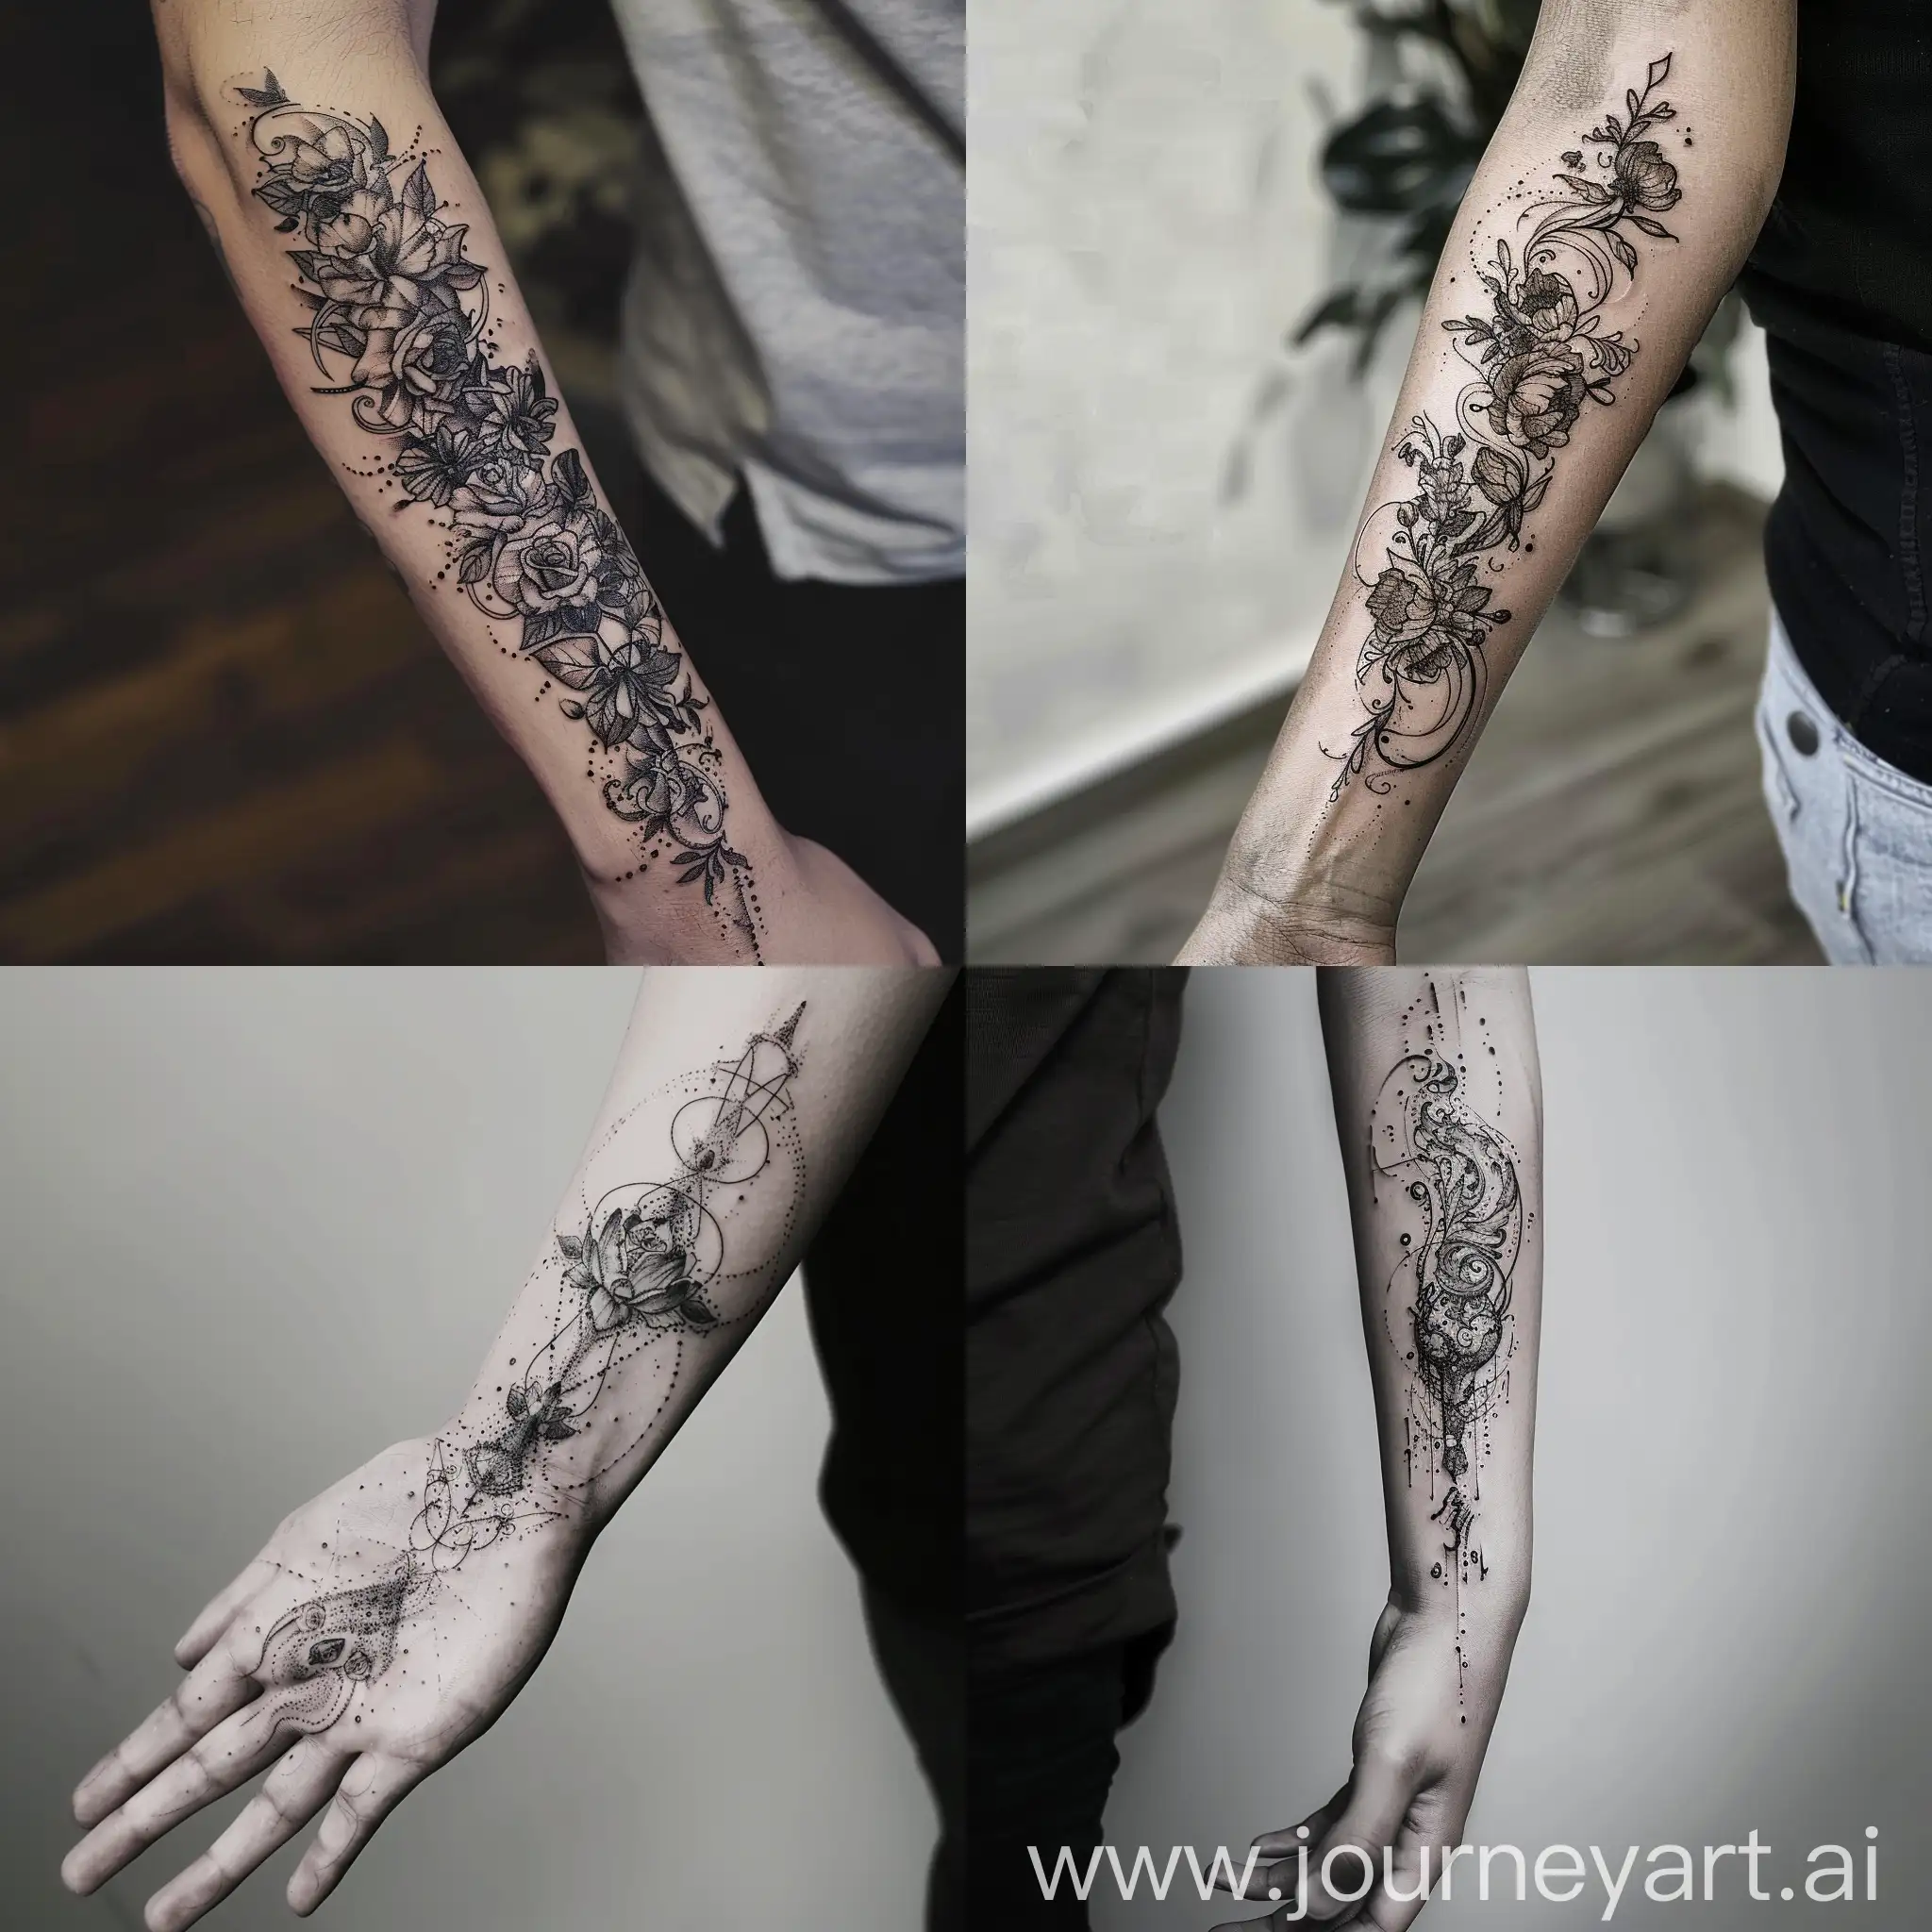 Evolving-Tattoo-Art-Forearm-Transformation-Imagery